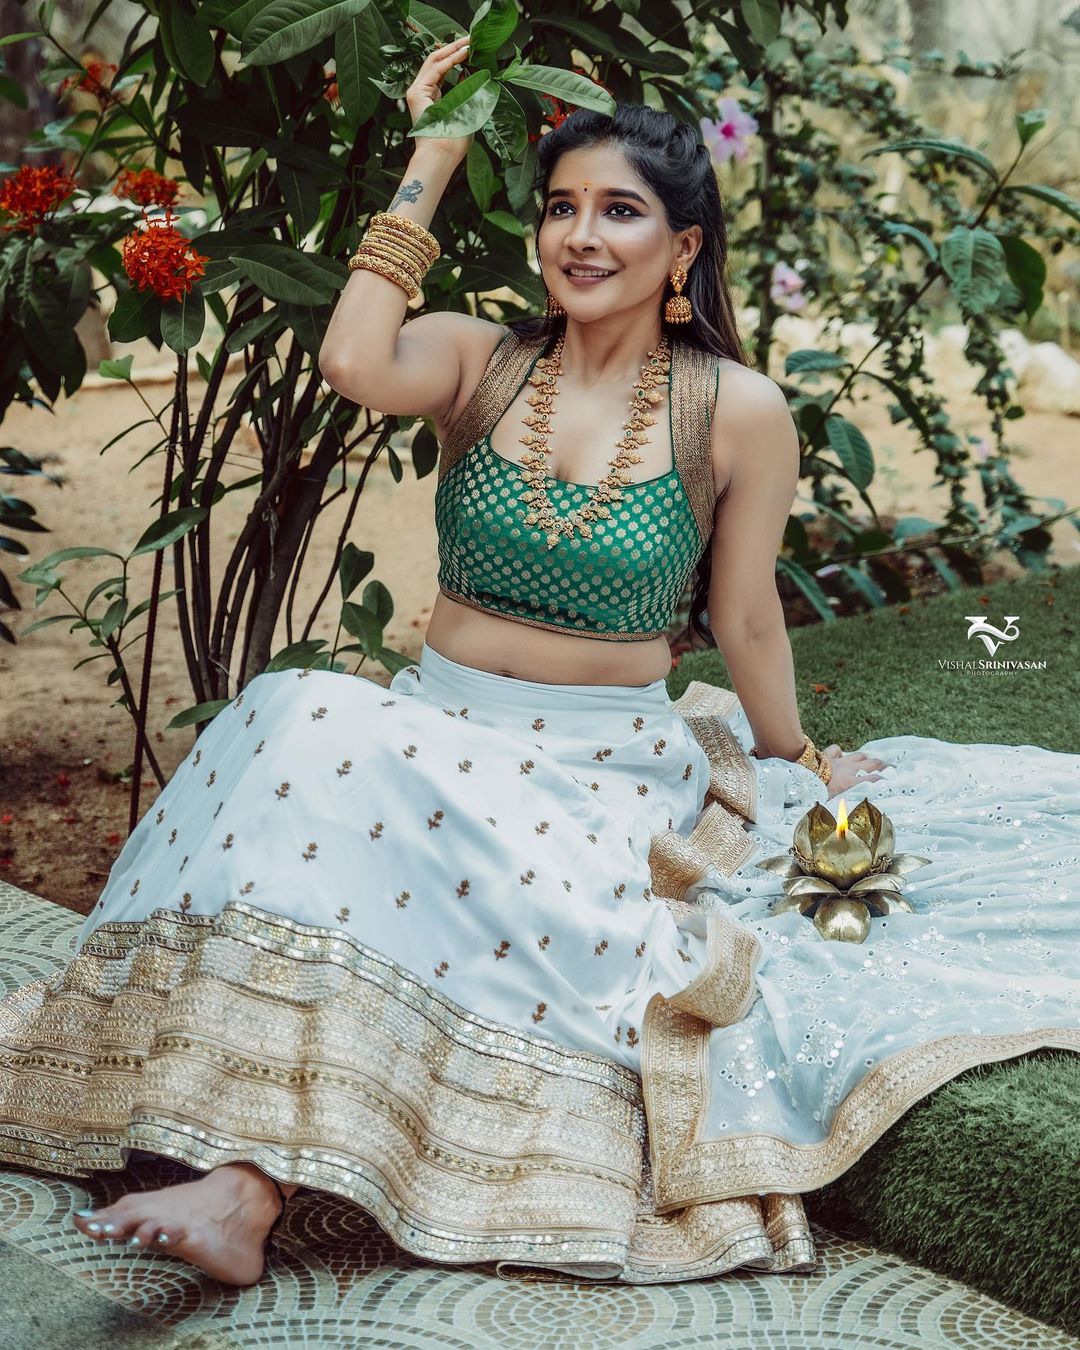 actress sakshi agarwal hot photos trending in social media